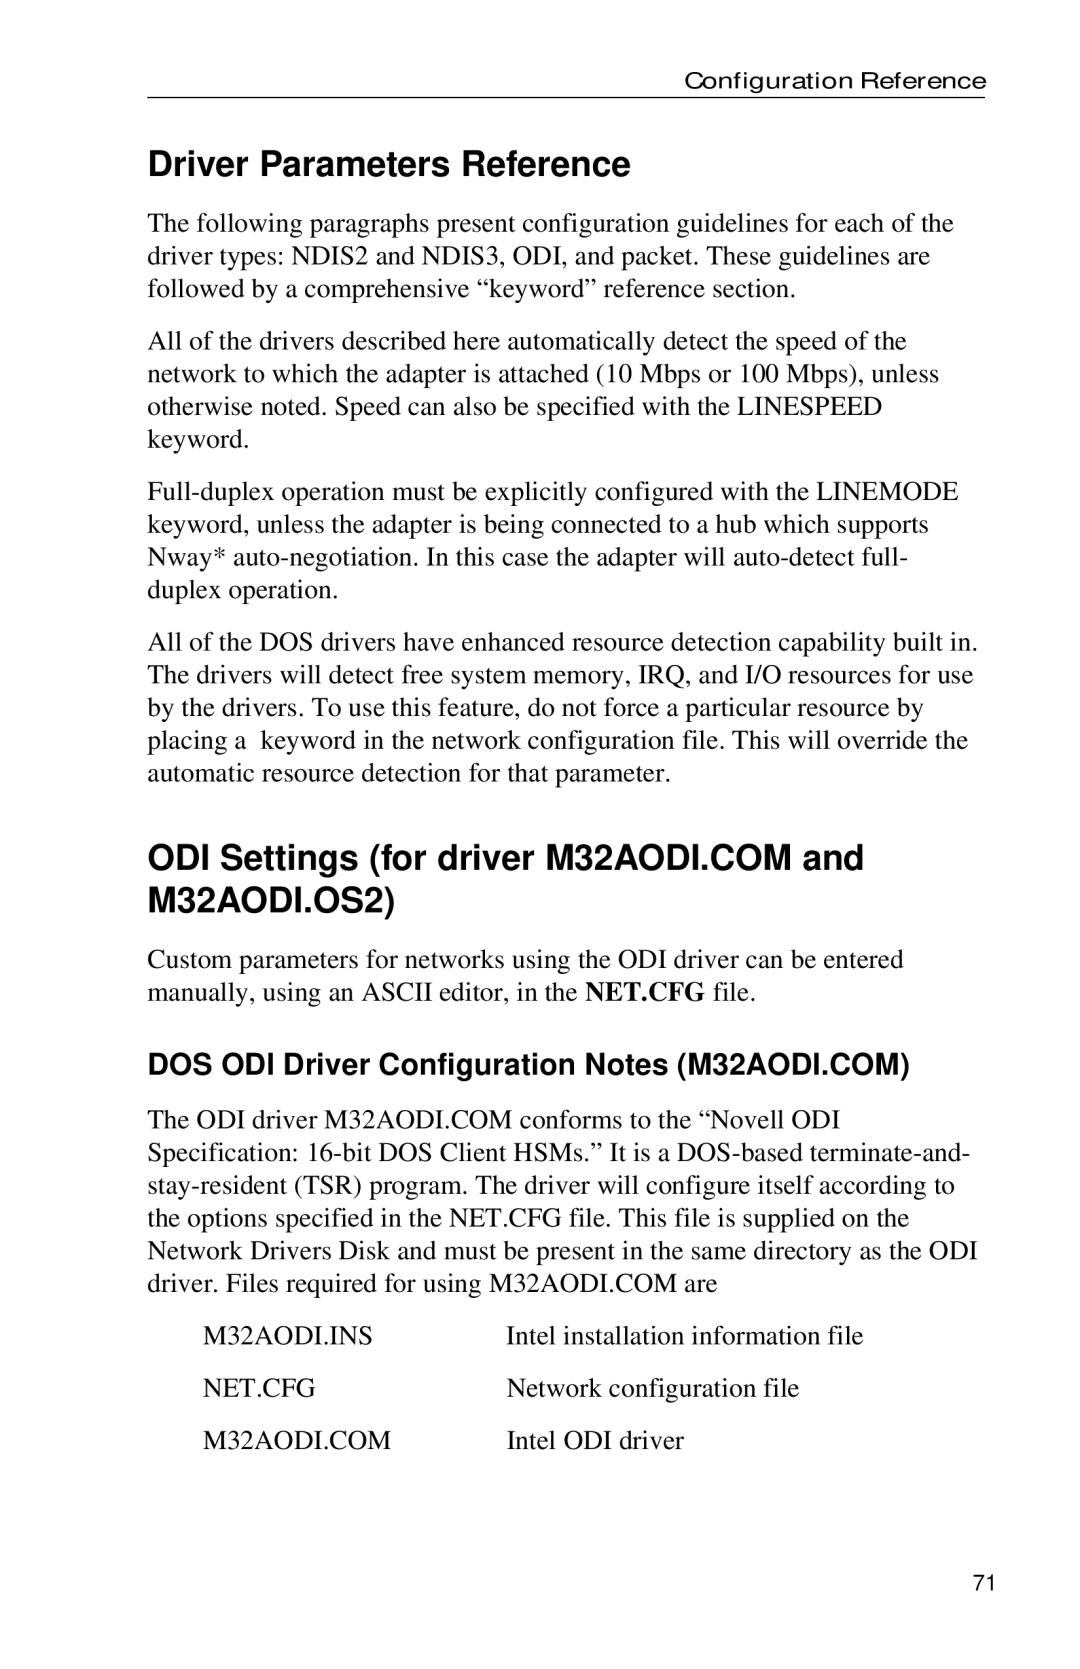 Intel PRO appendix Driver Parameters Reference, DOS ODI Driver Configuration Notes M32AODI.COM 